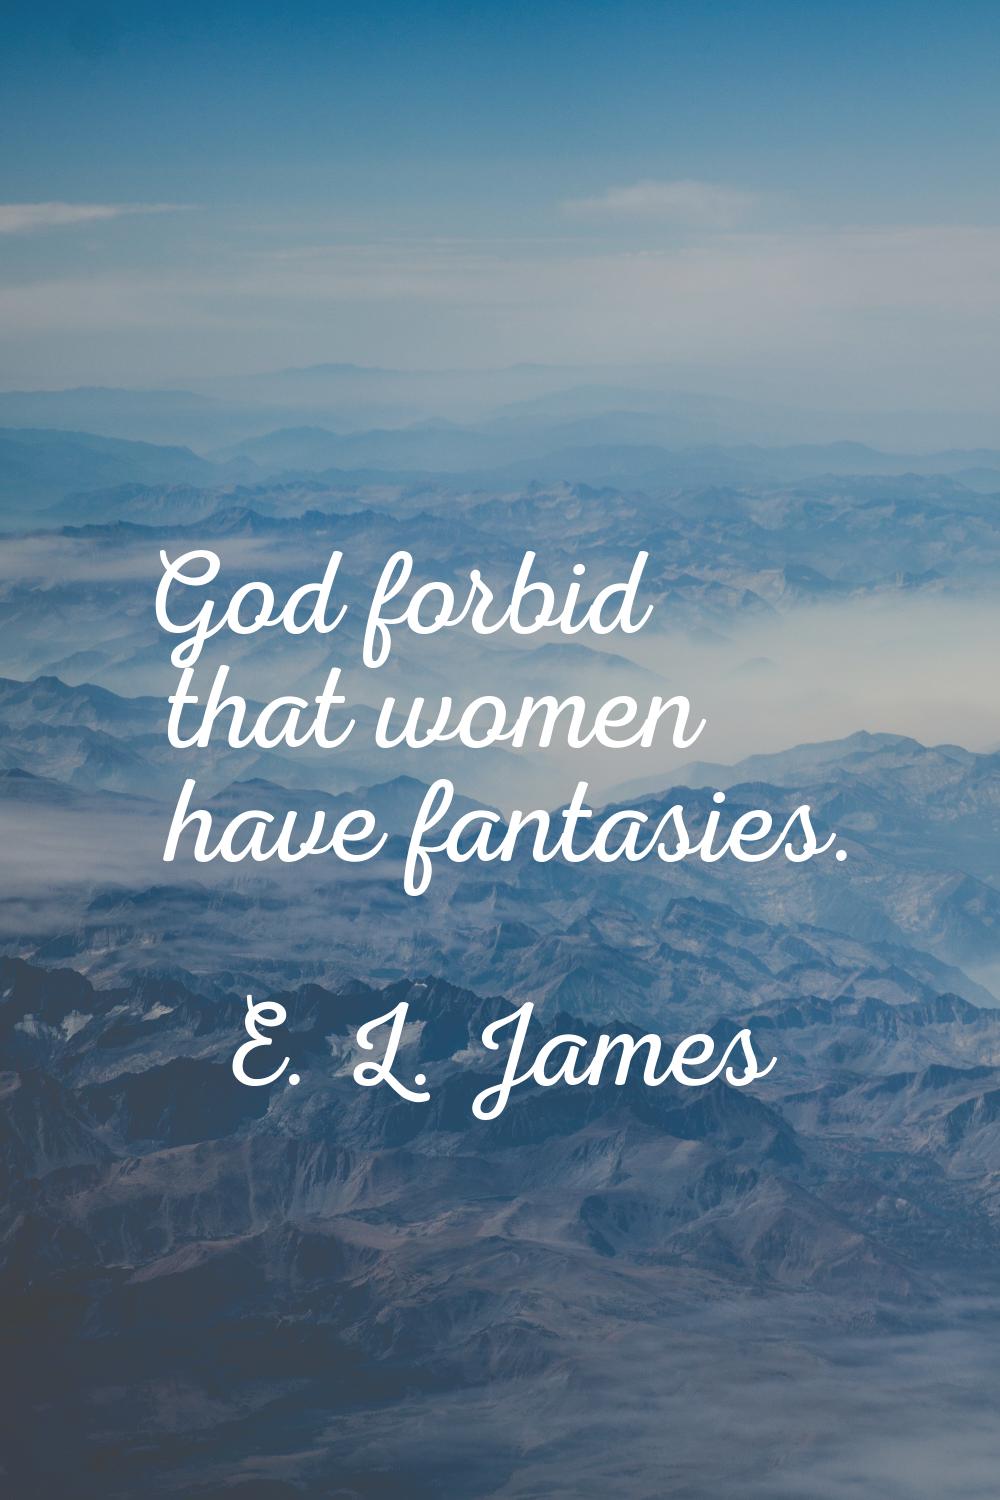 God forbid that women have fantasies.